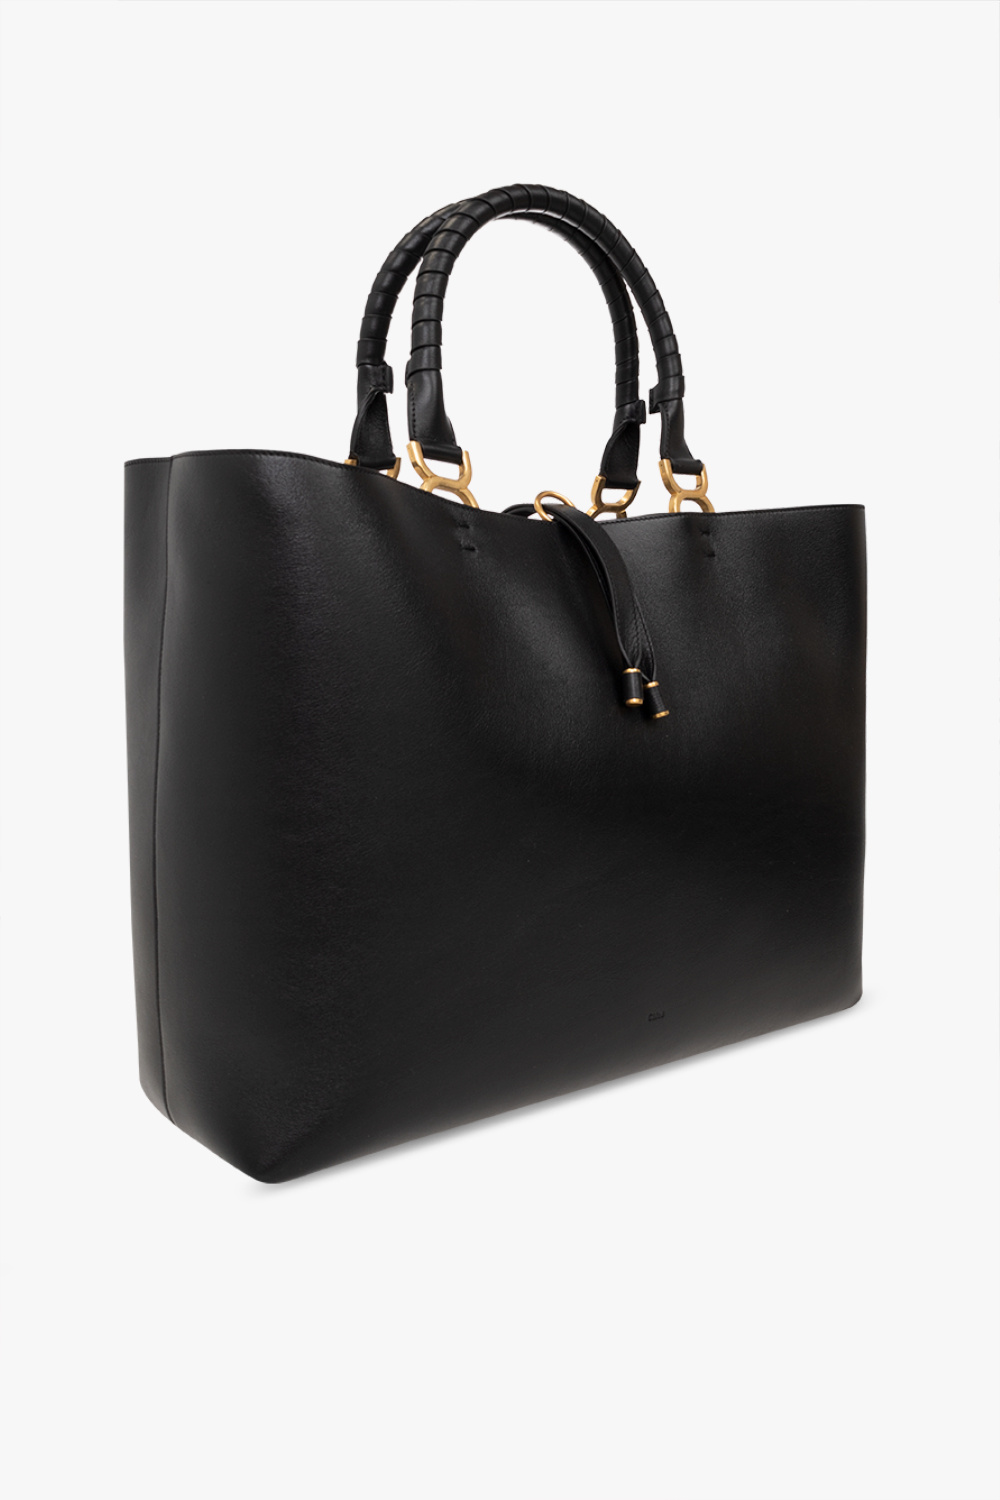 Chloé ‘Marcie’ shopper bag